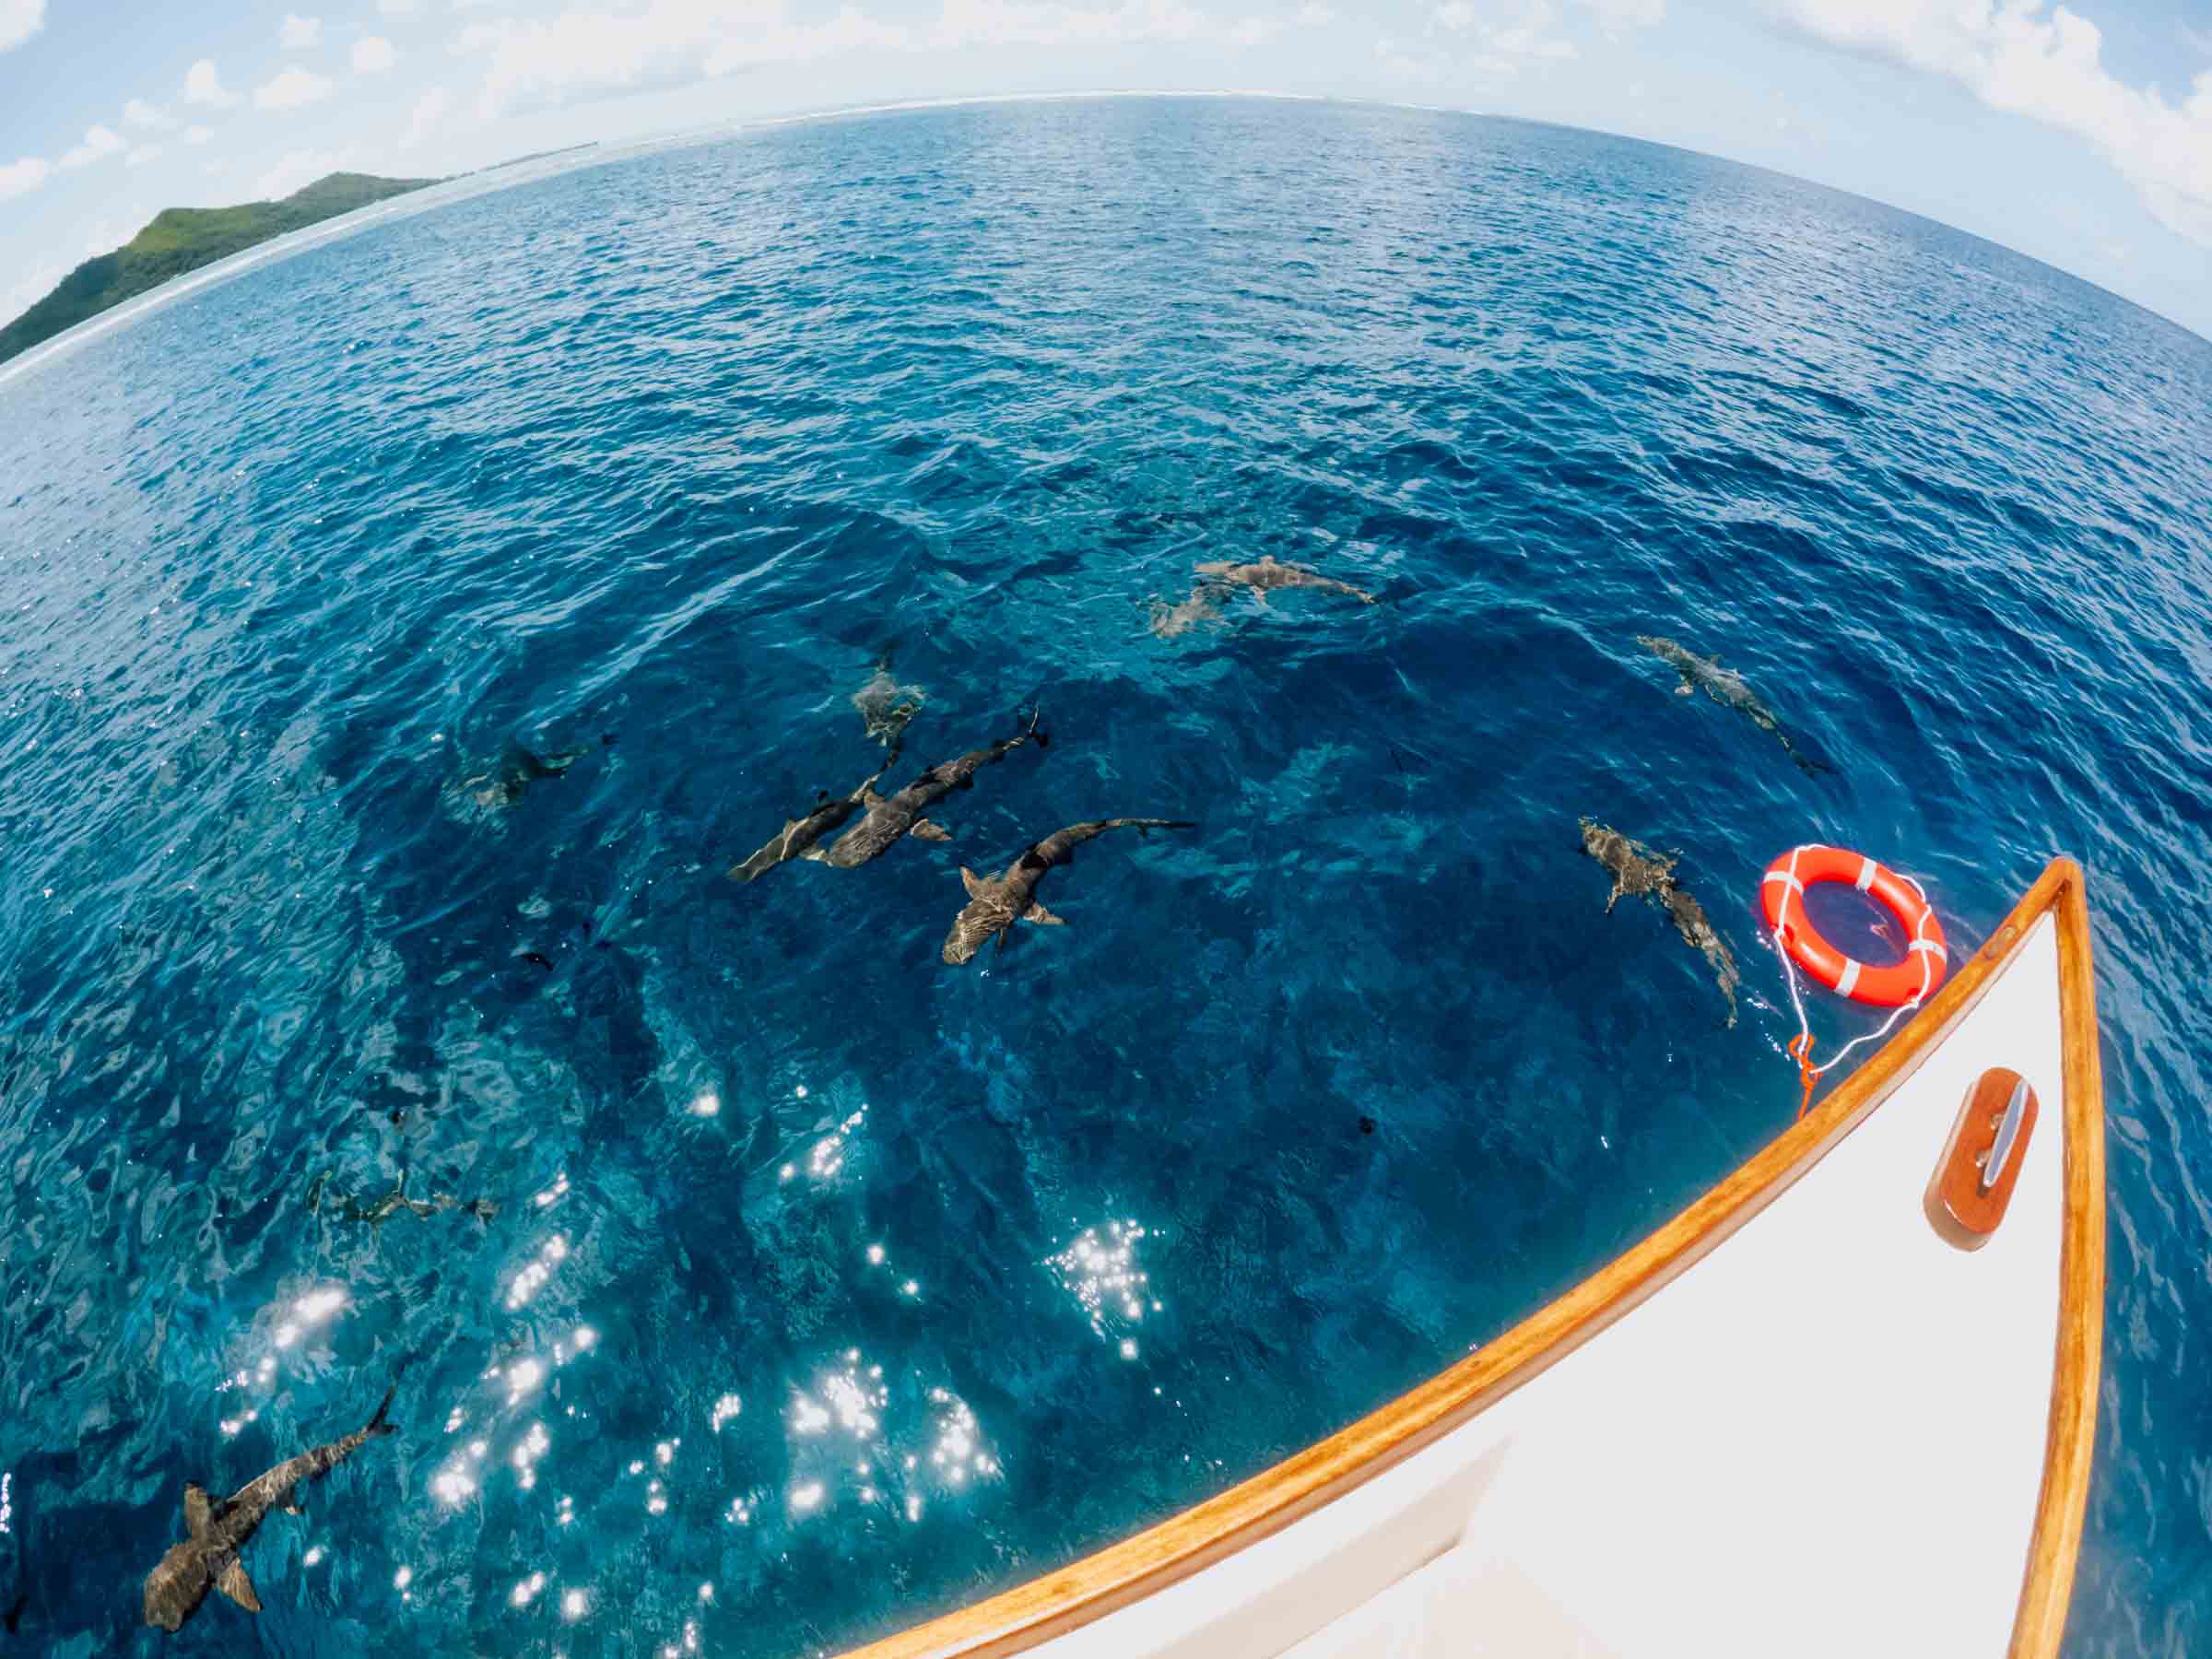 Sharks around a boat in Bora Bora